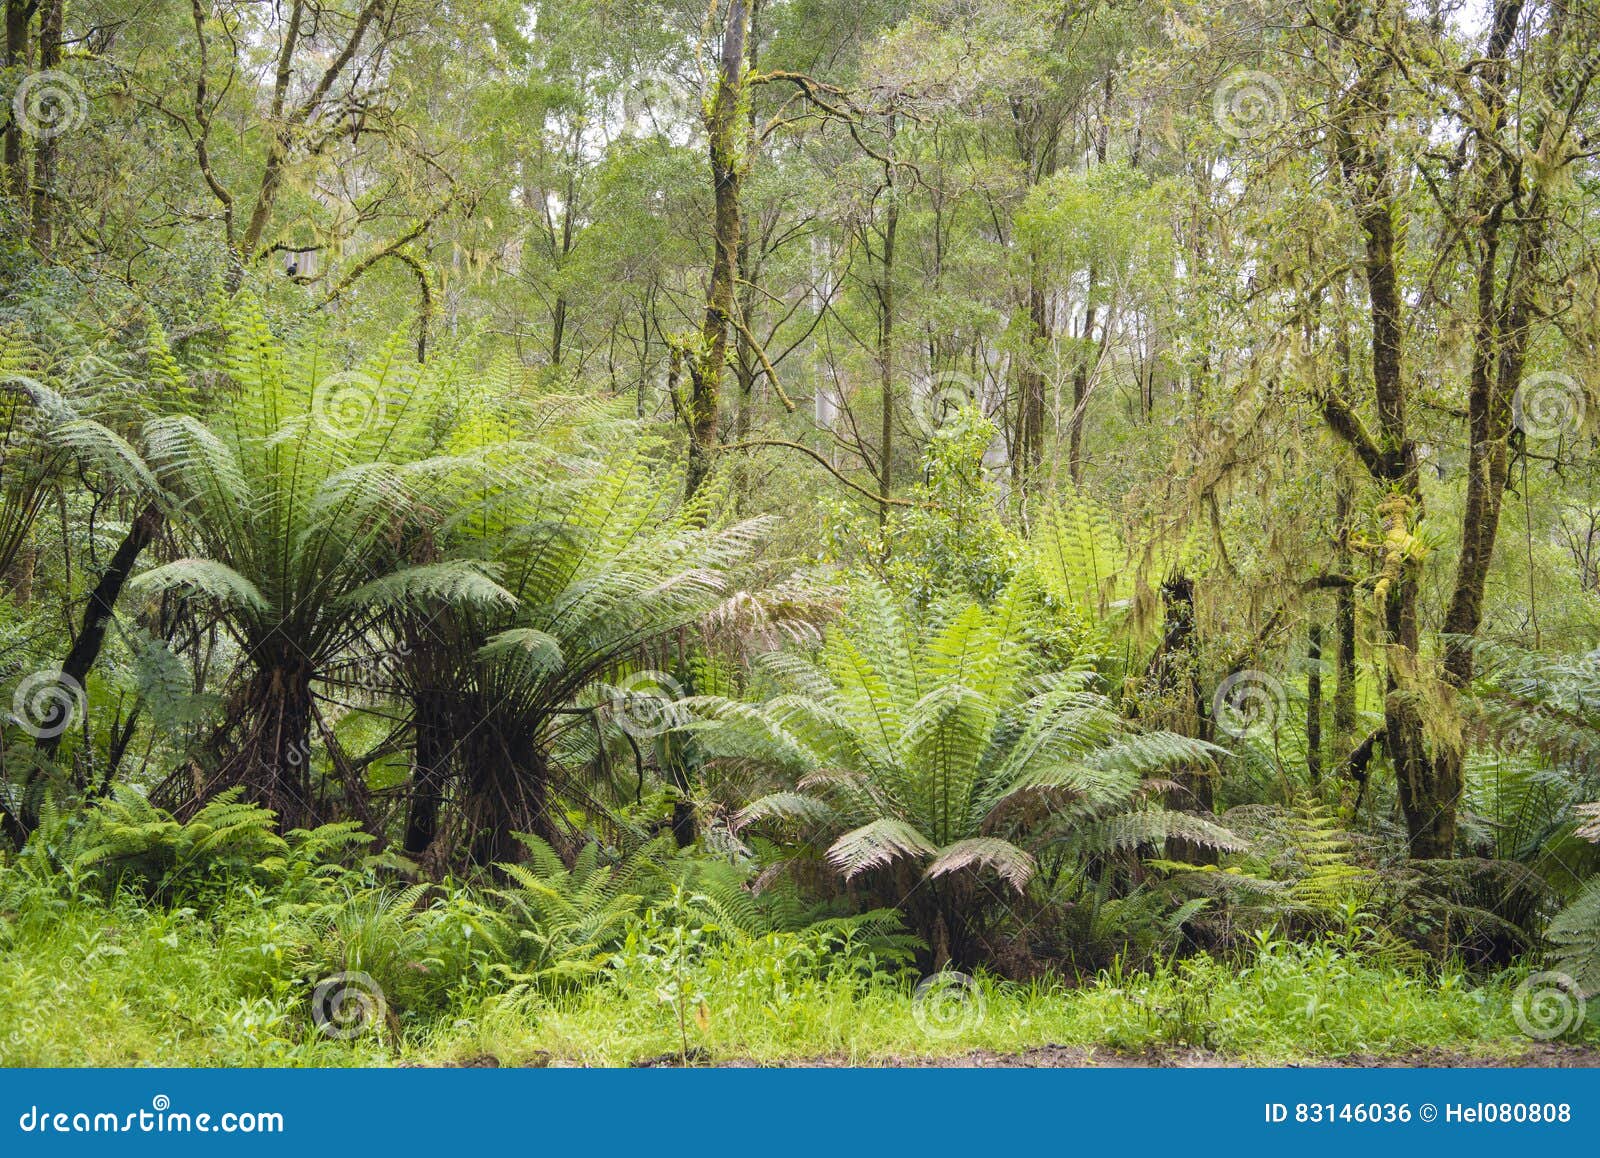 tree ferns in rainforest of otway national park, southern australia, victoria